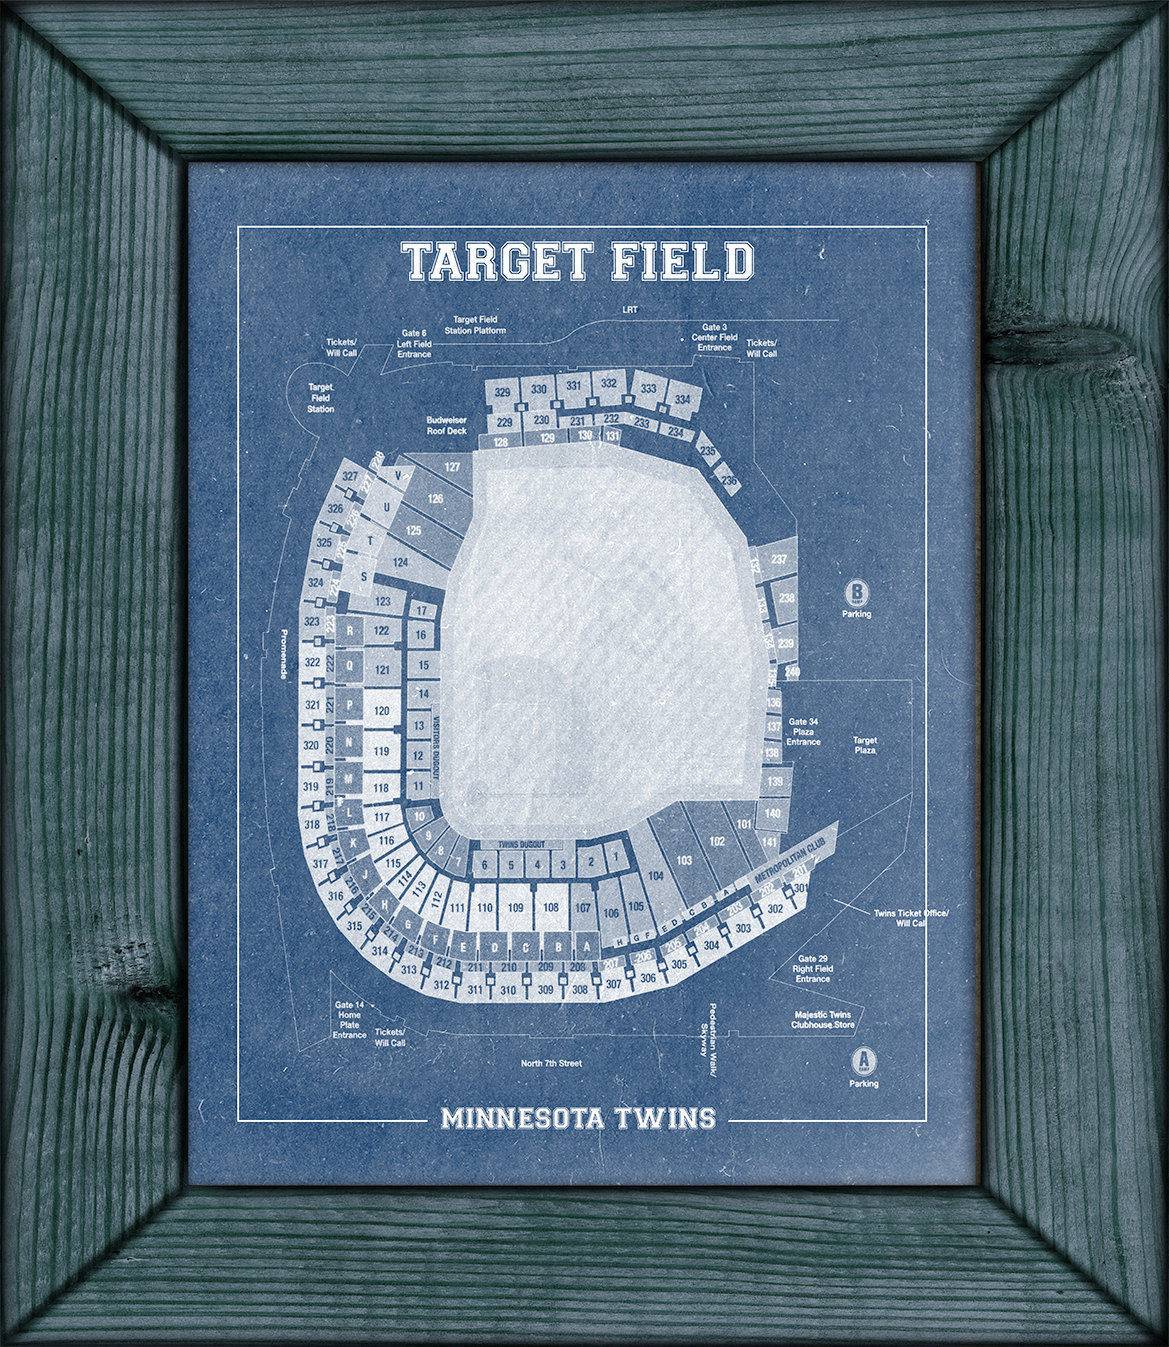 Print Of Vintage Minnesota Twins Target Field Baseball Seating Chart Poster Canvas Wall Art Jenifer